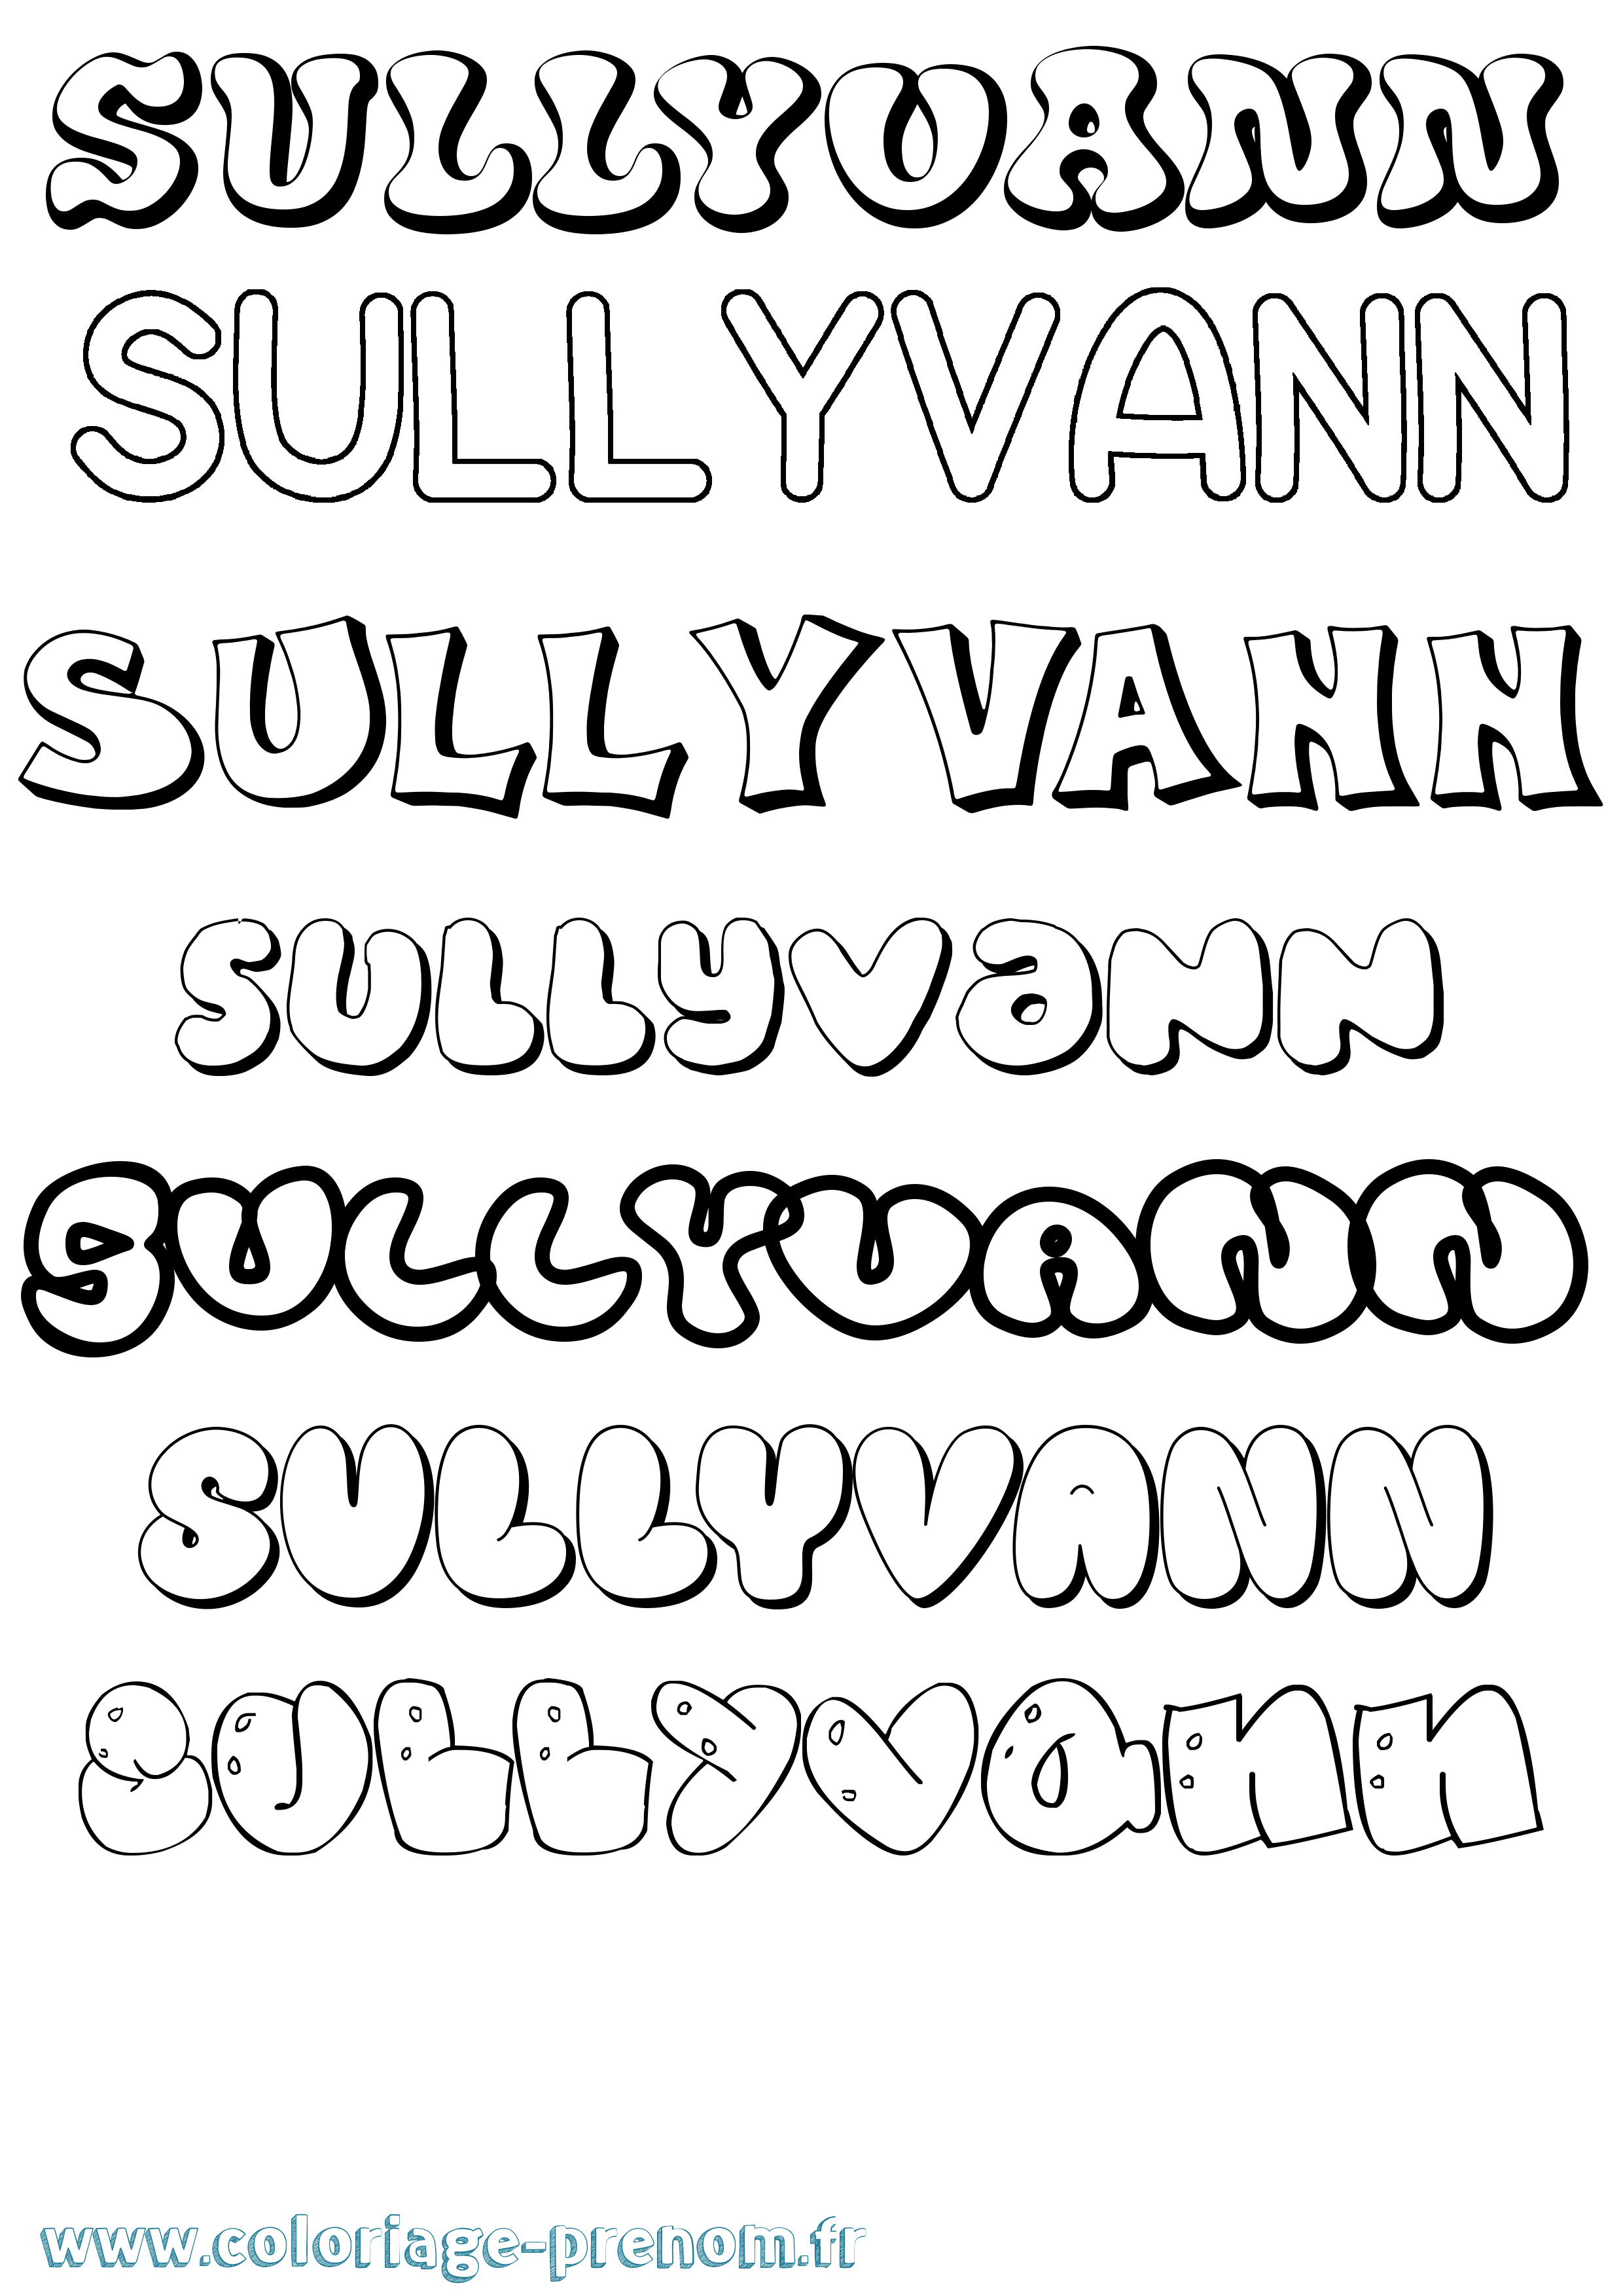 Coloriage prénom Sullyvann Bubble